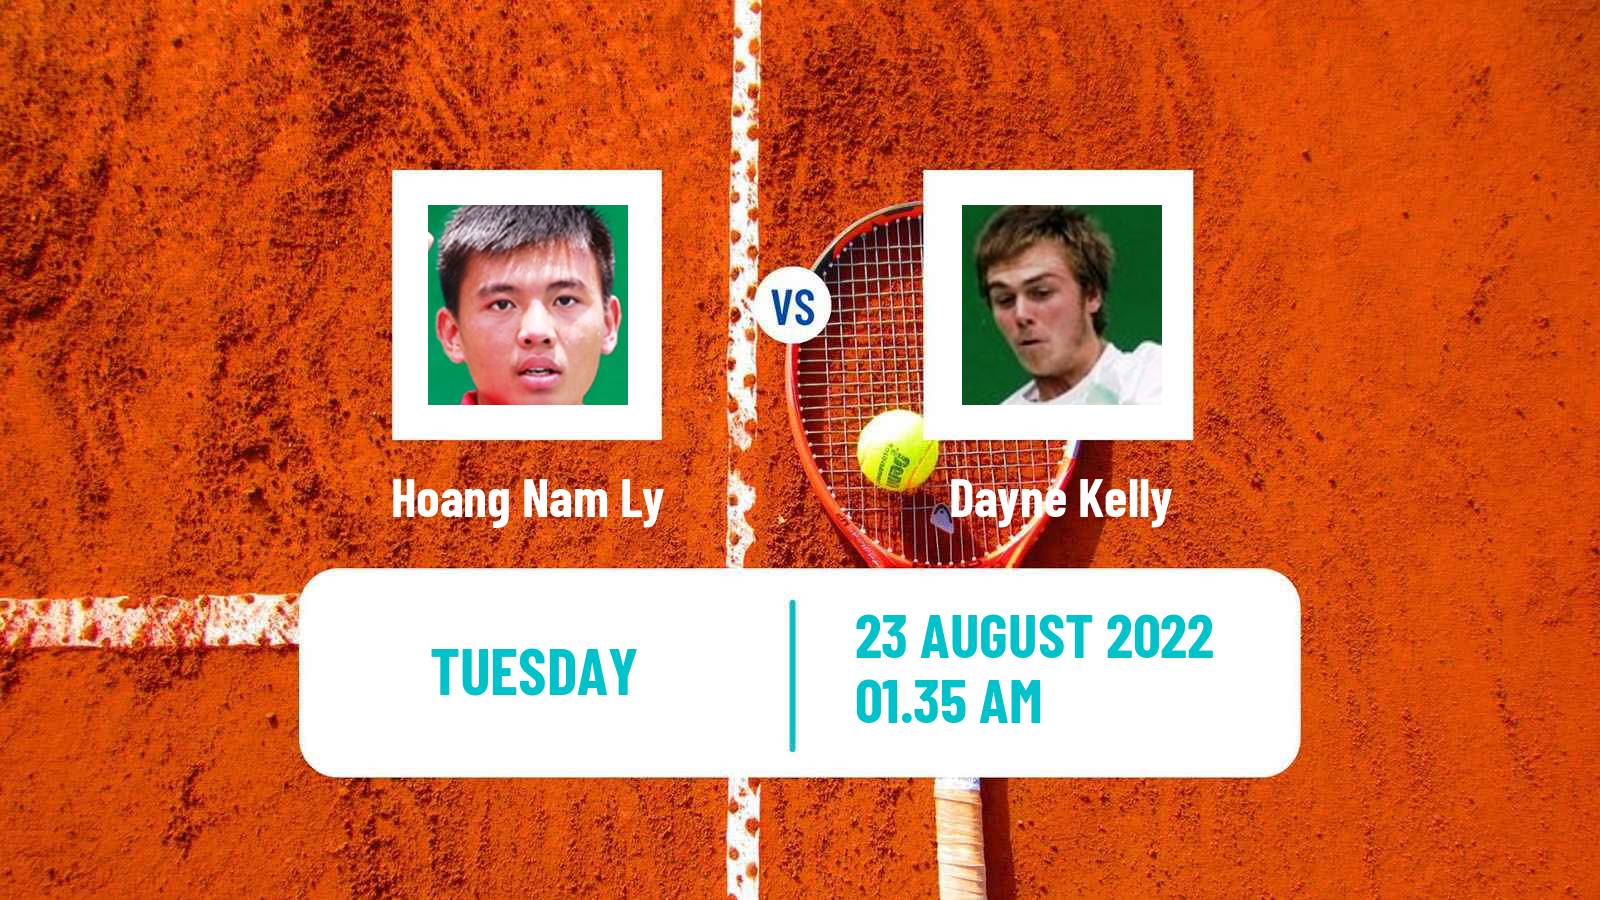 Tennis ATP Challenger Hoang Nam Ly - Dayne Kelly